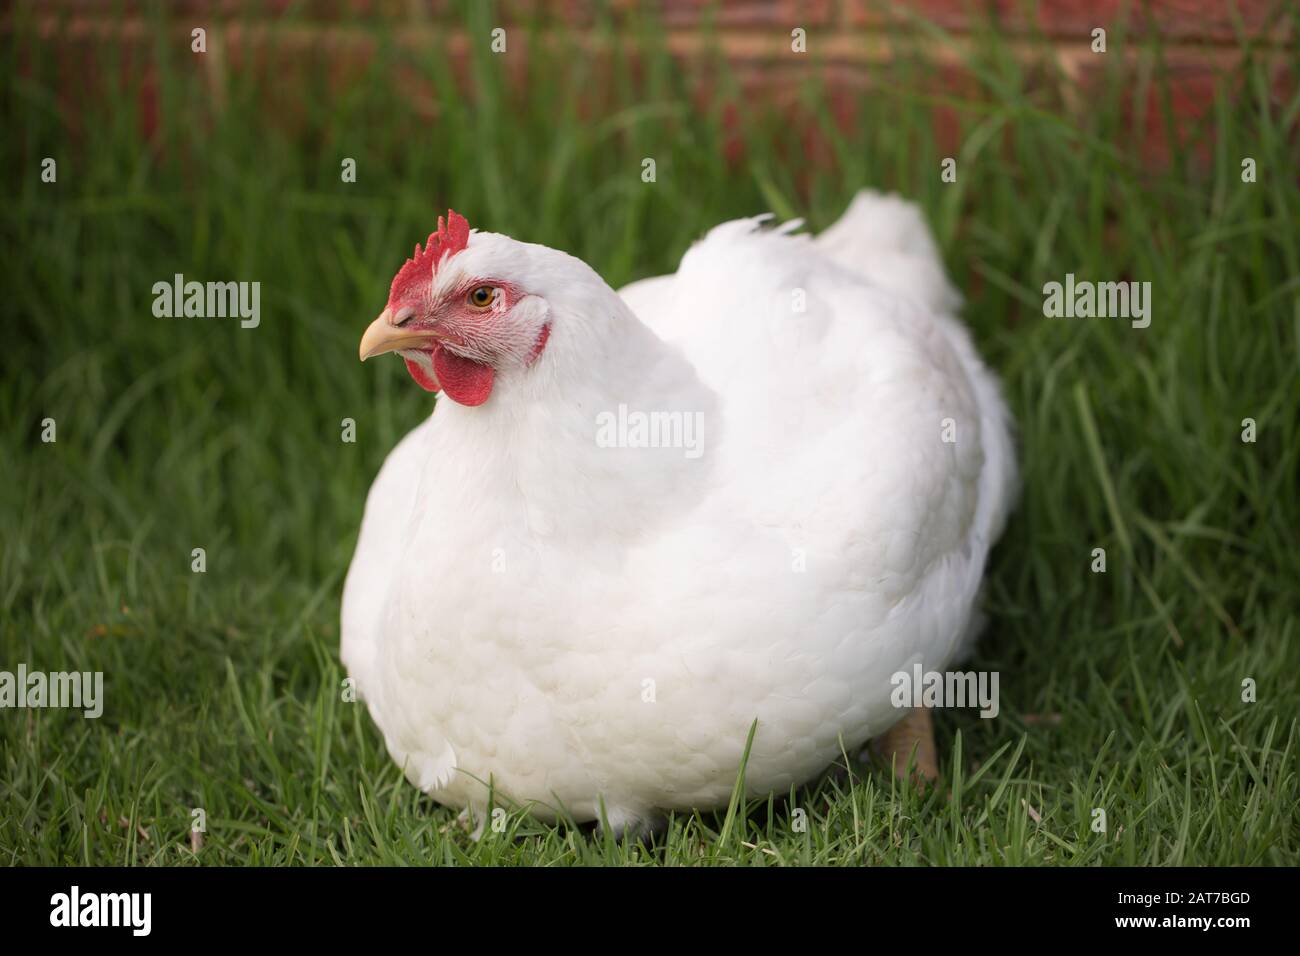 portrait of white broiler chicken (Gallus gallus domesticus) full body looking at the camera, free range chicken on chicken farm Stock Photo